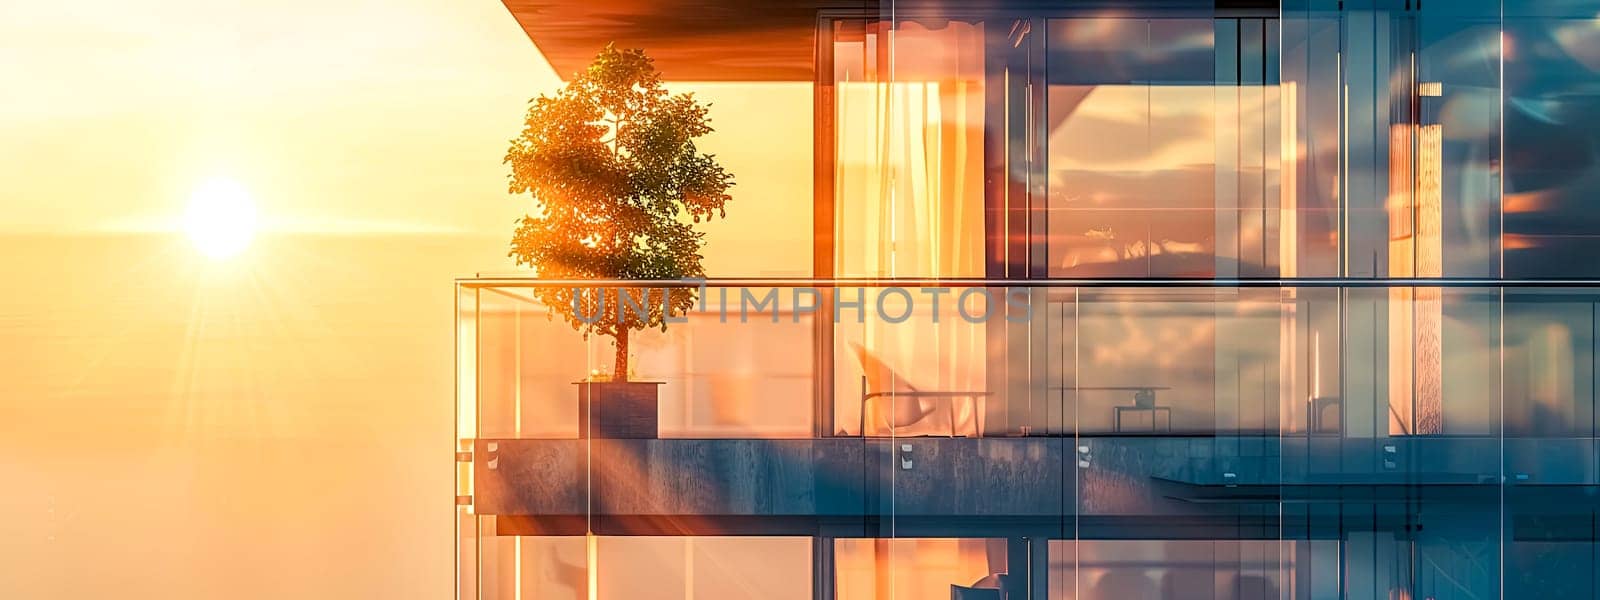 Warm sunset hues bathe a contemporary apartment balcony and glass facade